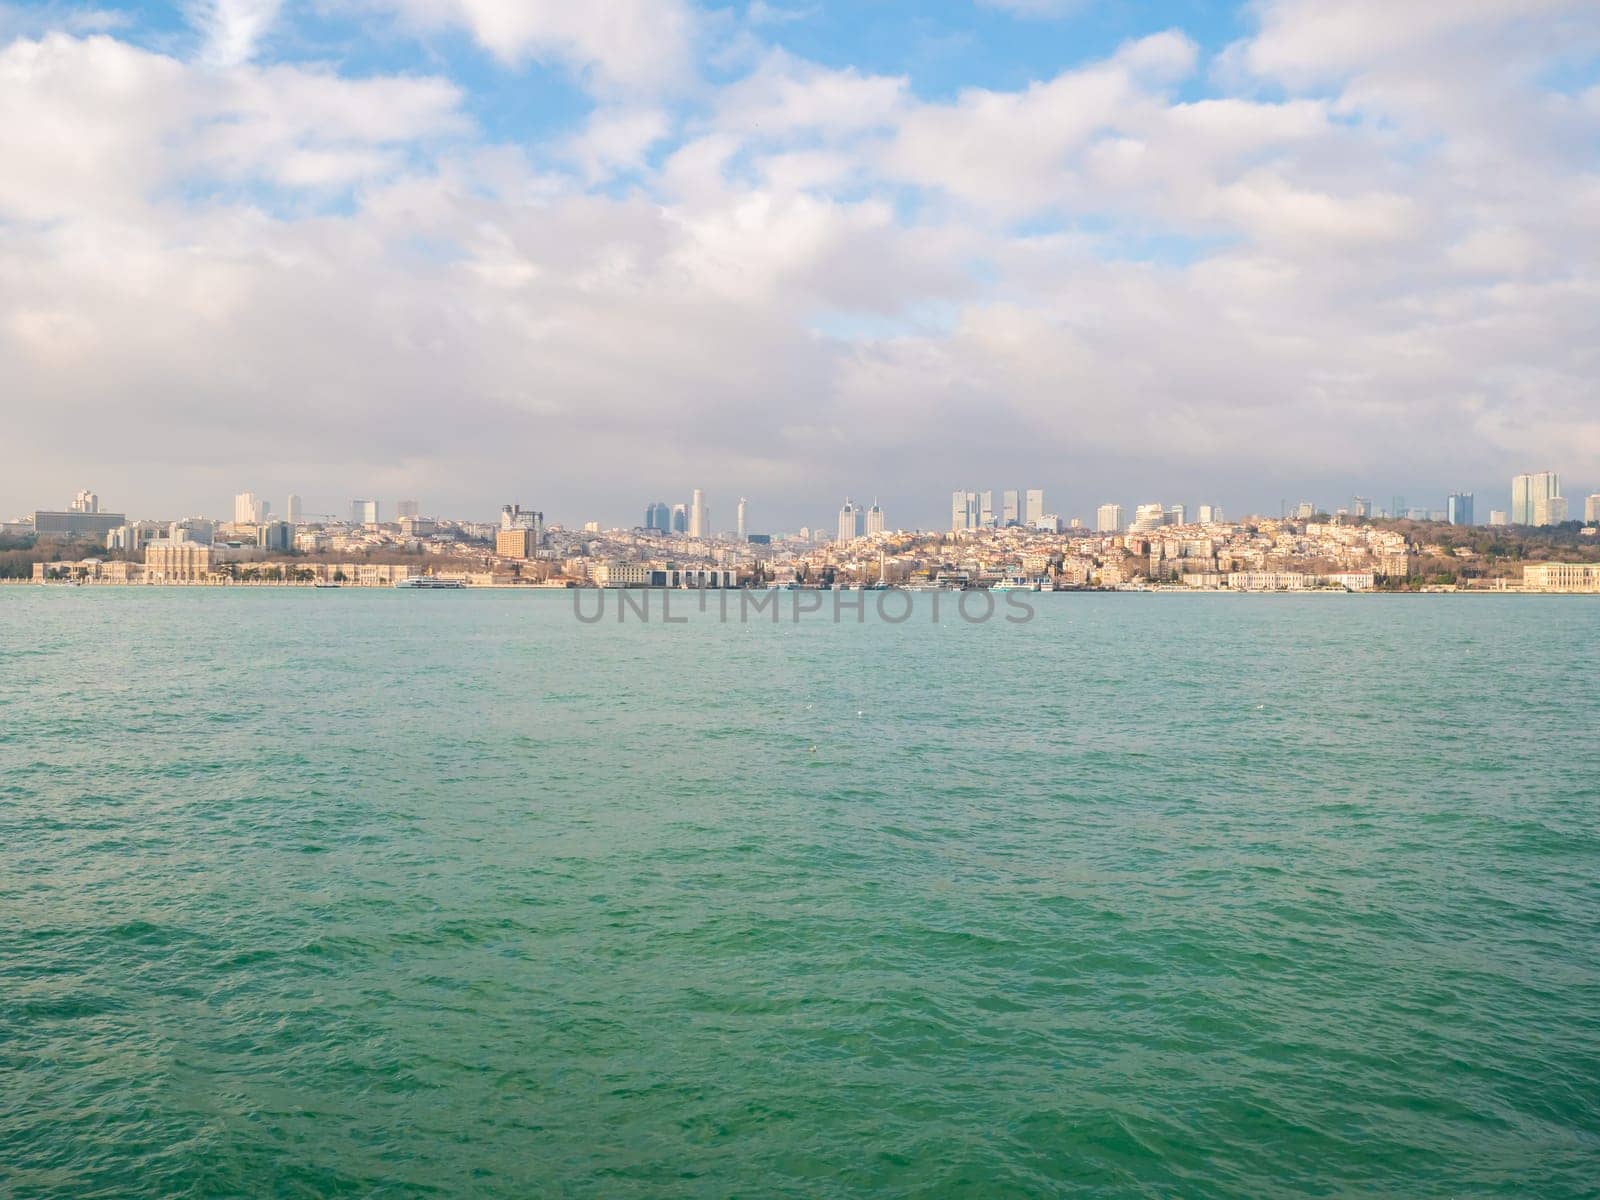 Bosphorus Strait in the city of Istanbul. Turkey. by DovidPro